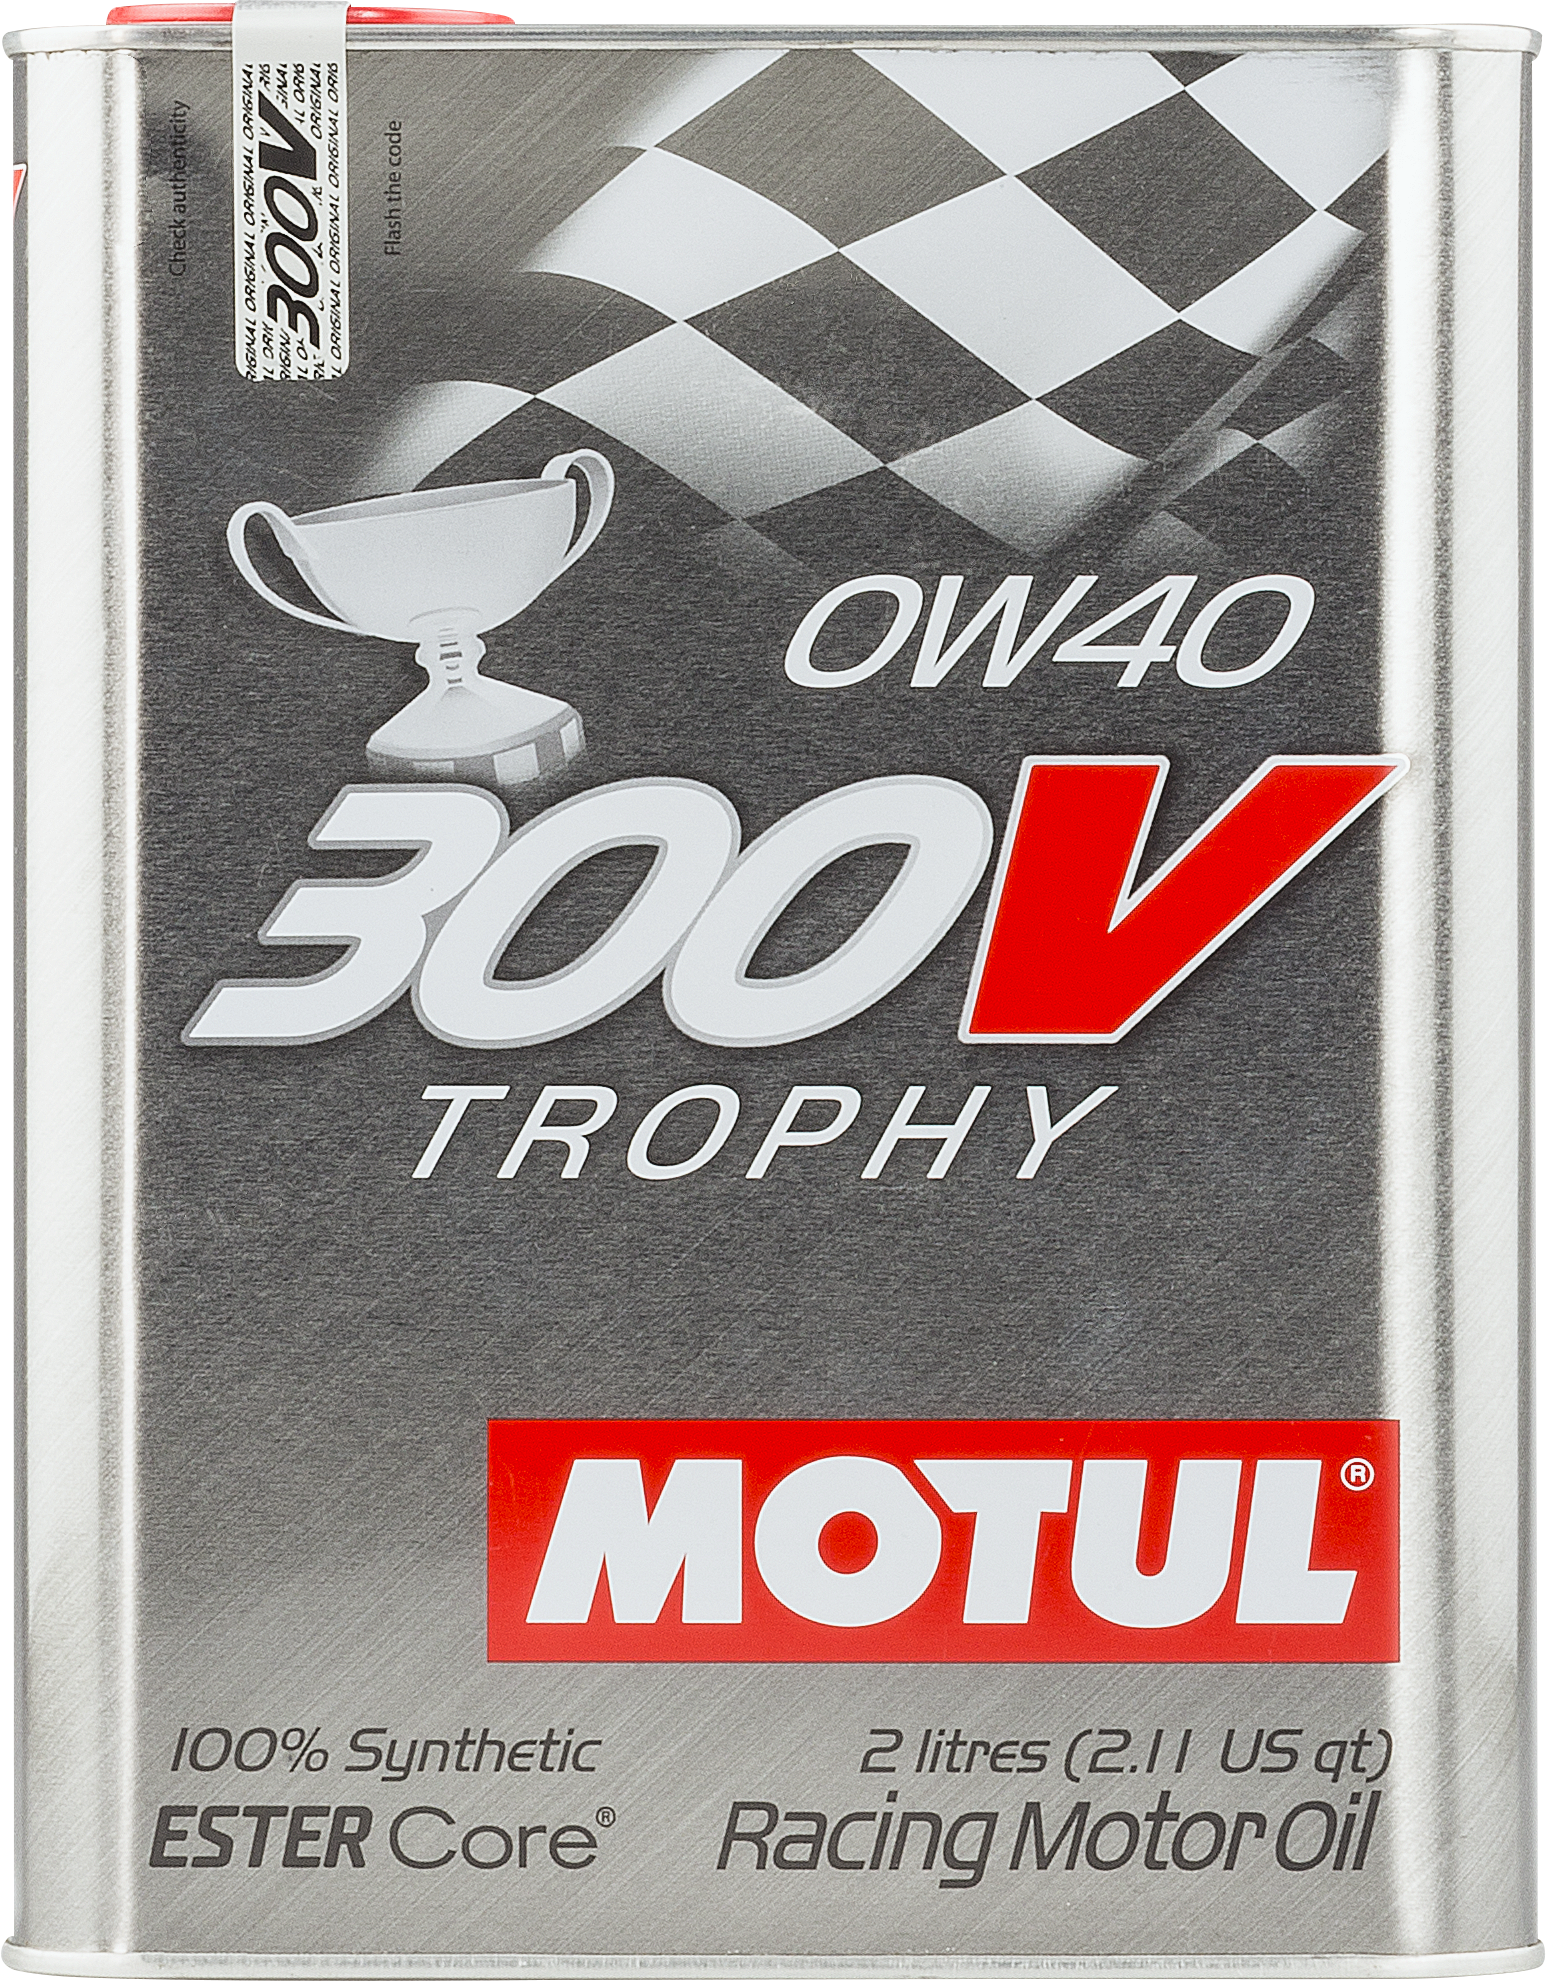 Motul 300v Trophy 0w-40